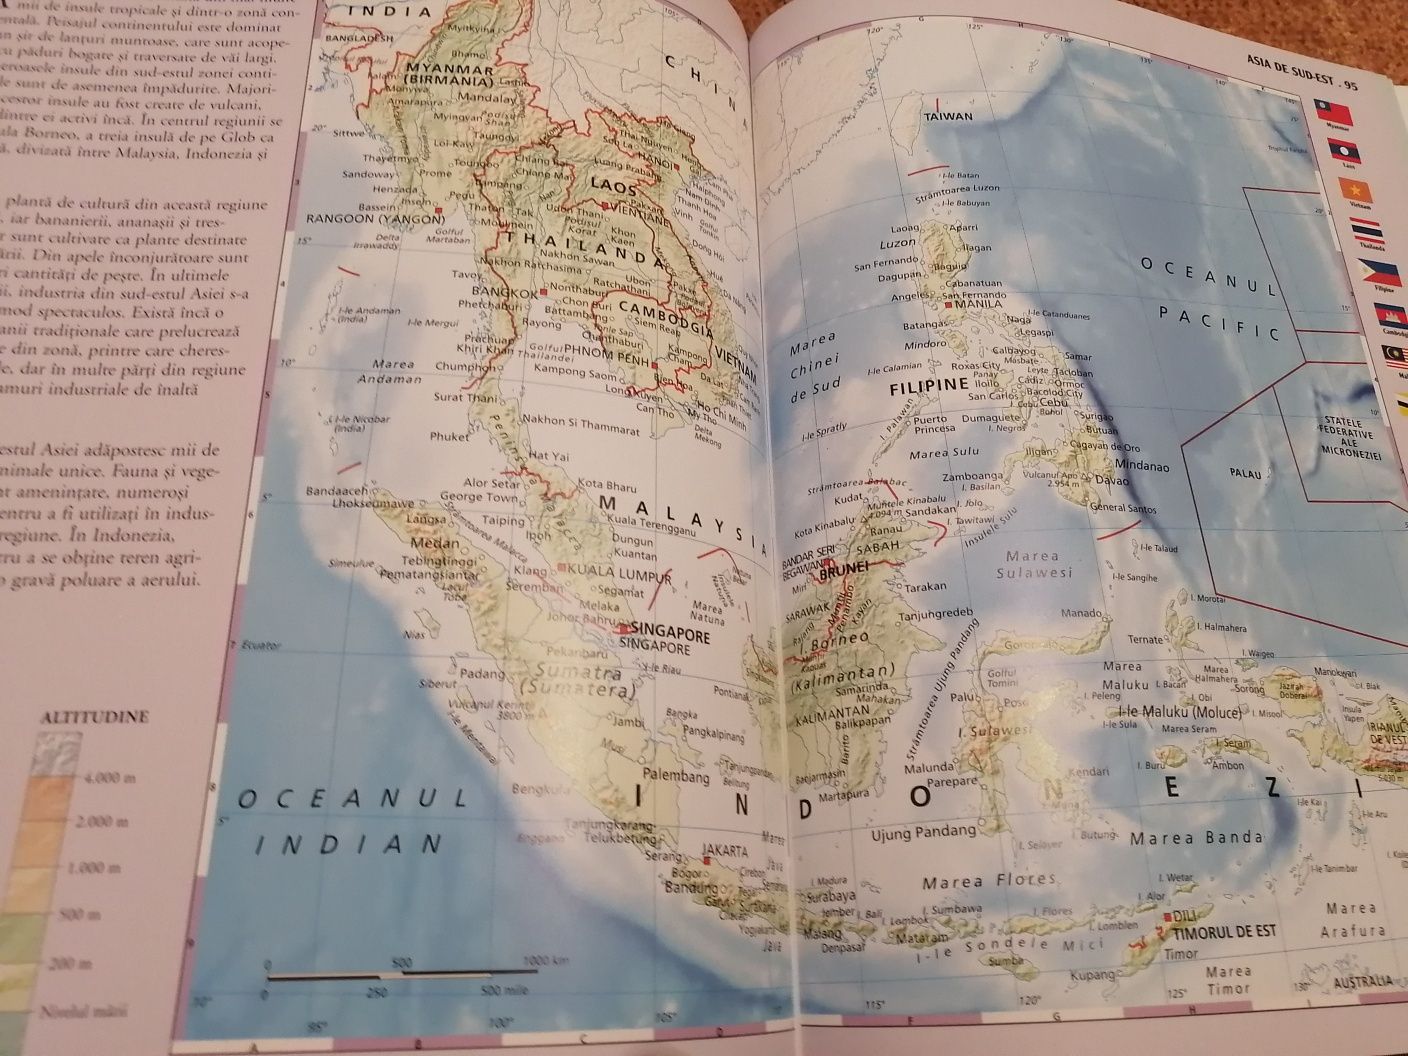 Atlas Geografic al Lumii 2006, calitate superioara, 128 pagini +CD